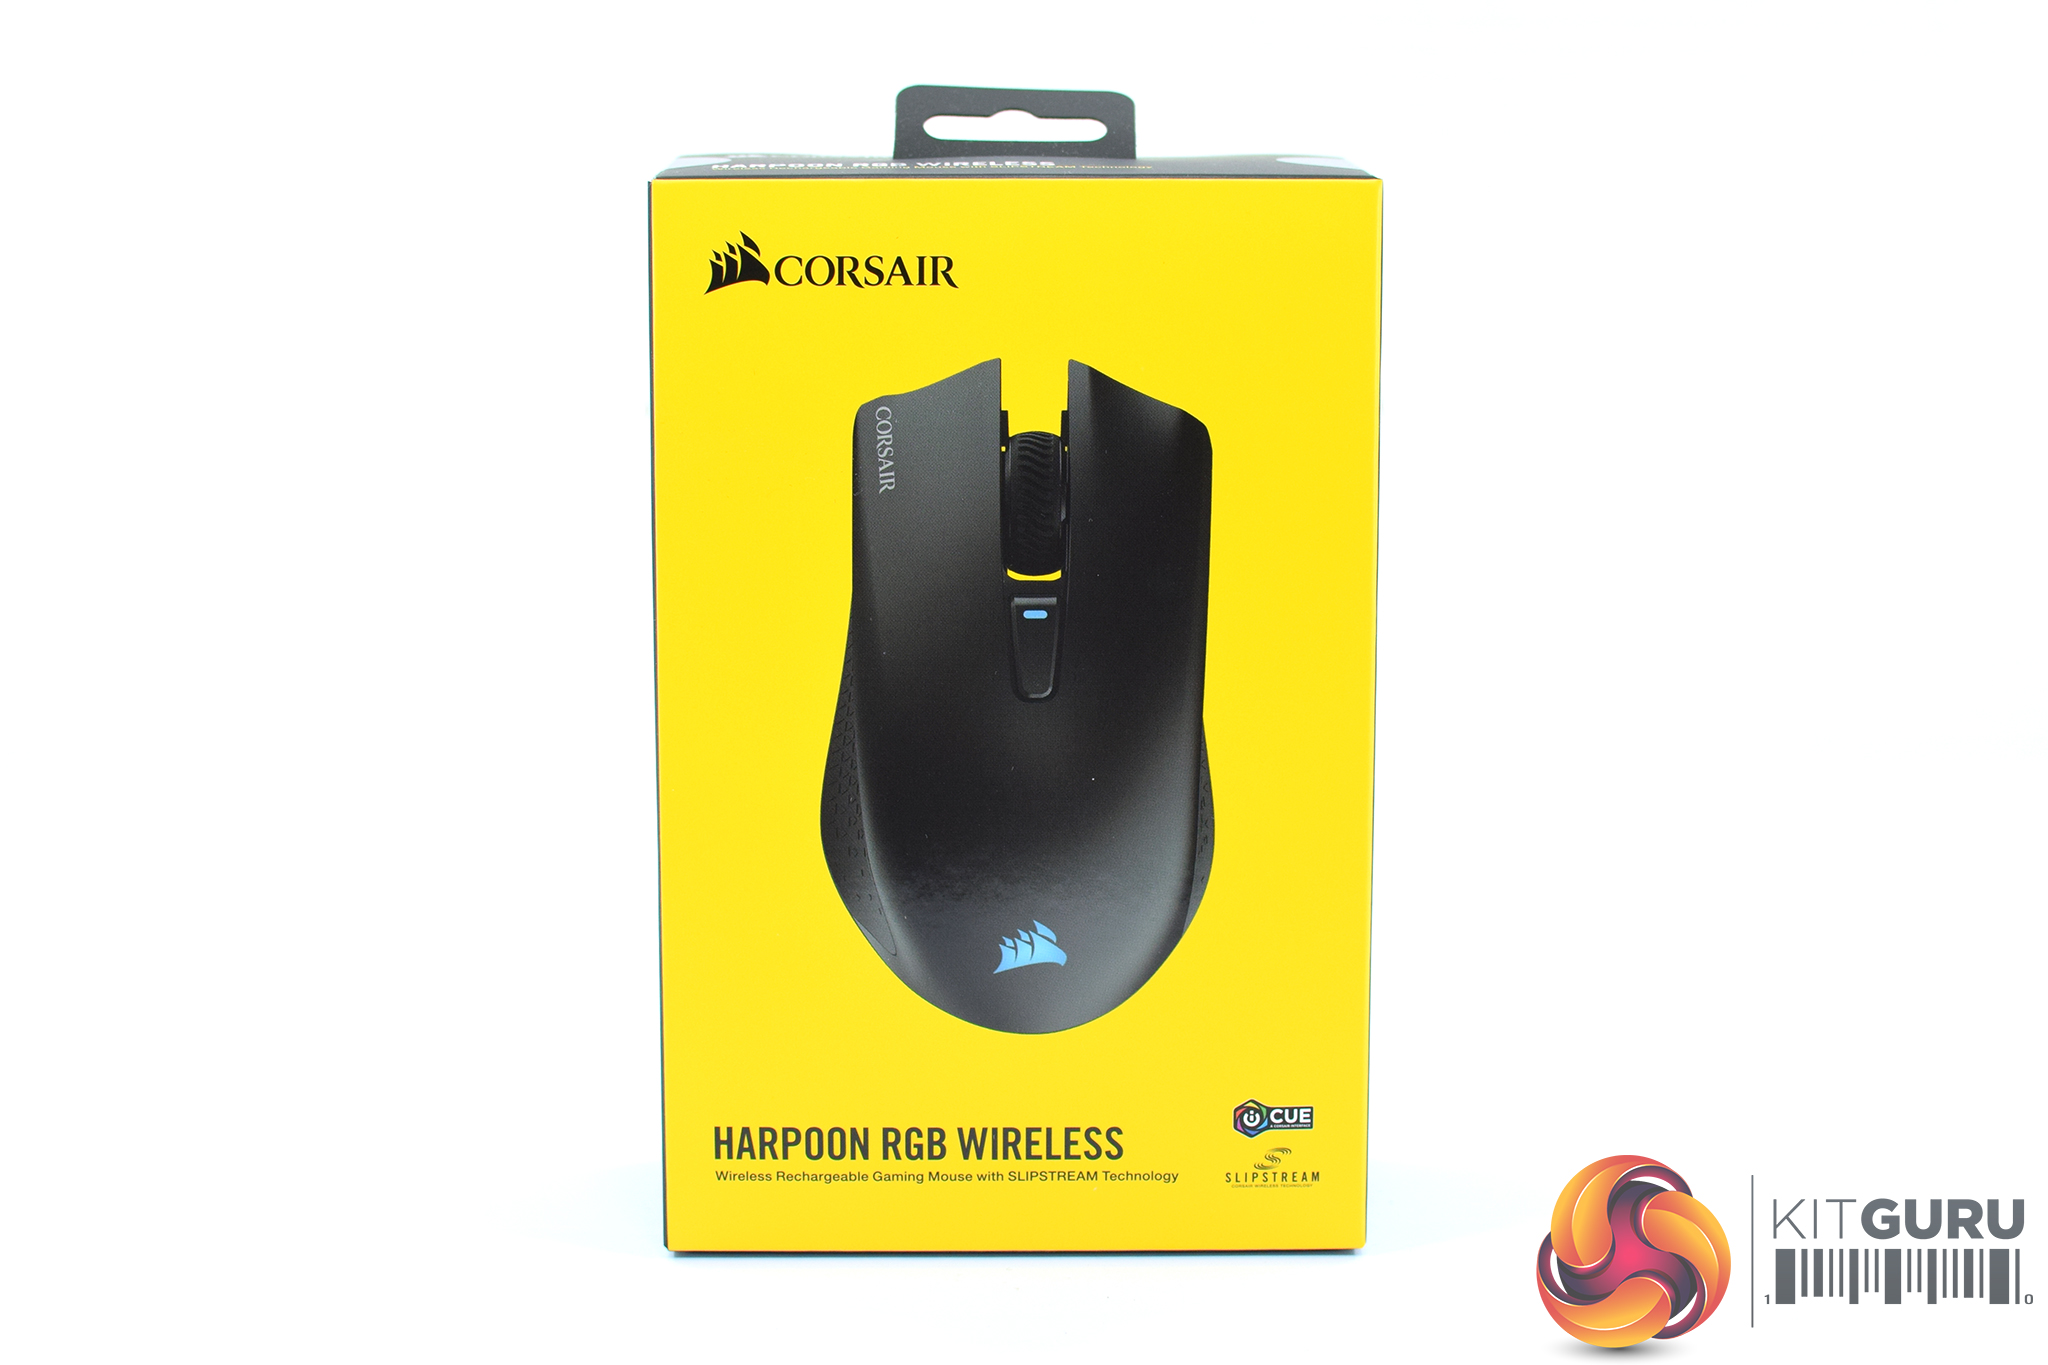 Corsair Harpoon RGB Wireless Mouse Review KitGuru-